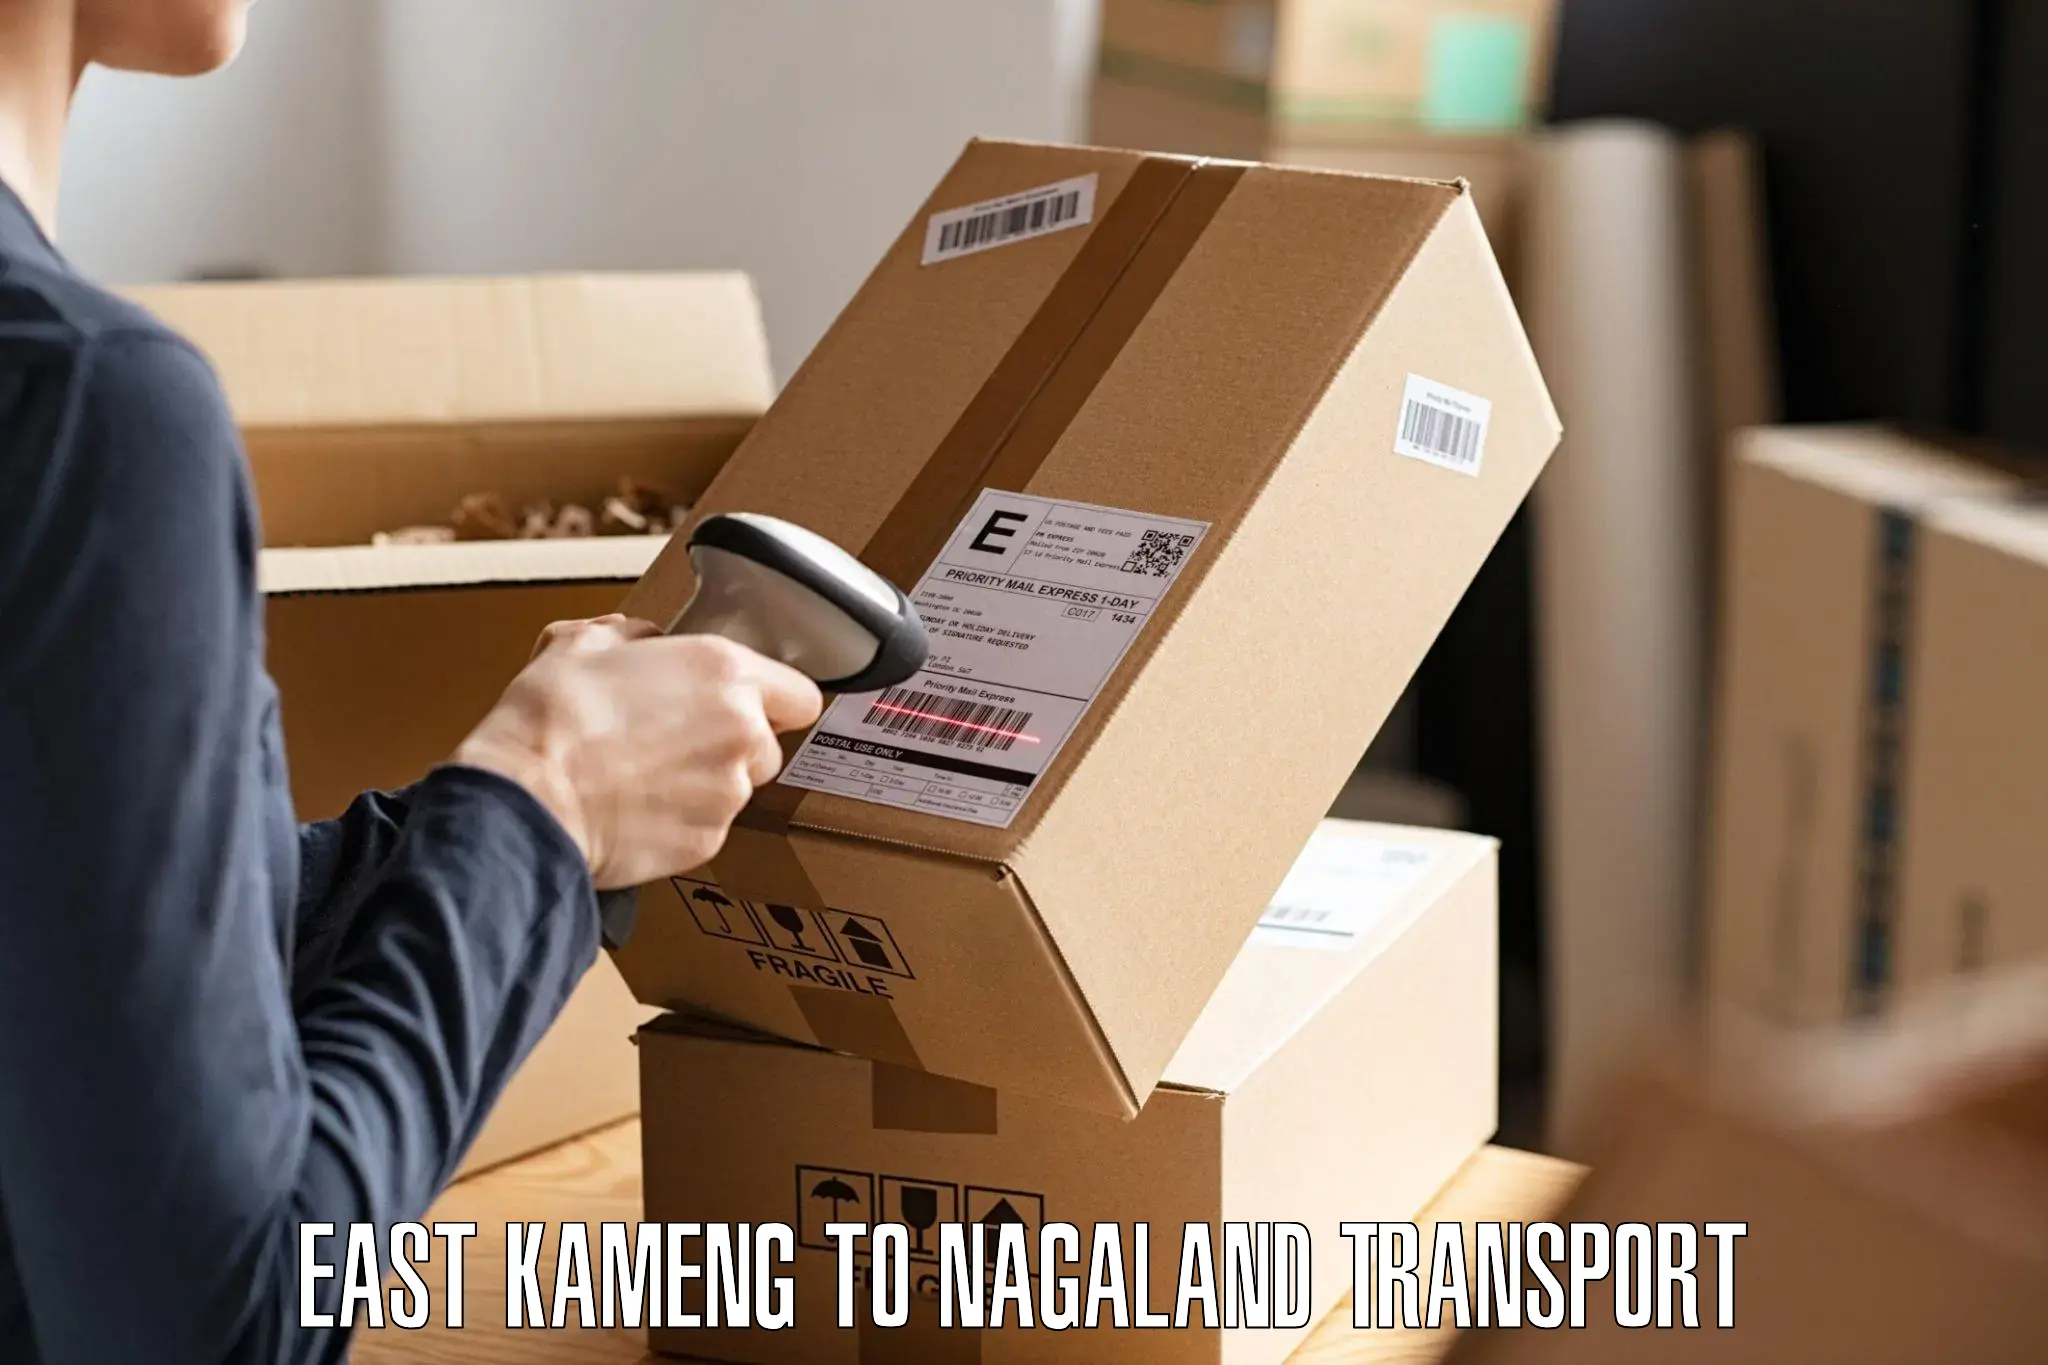 Daily transport service East Kameng to Nagaland